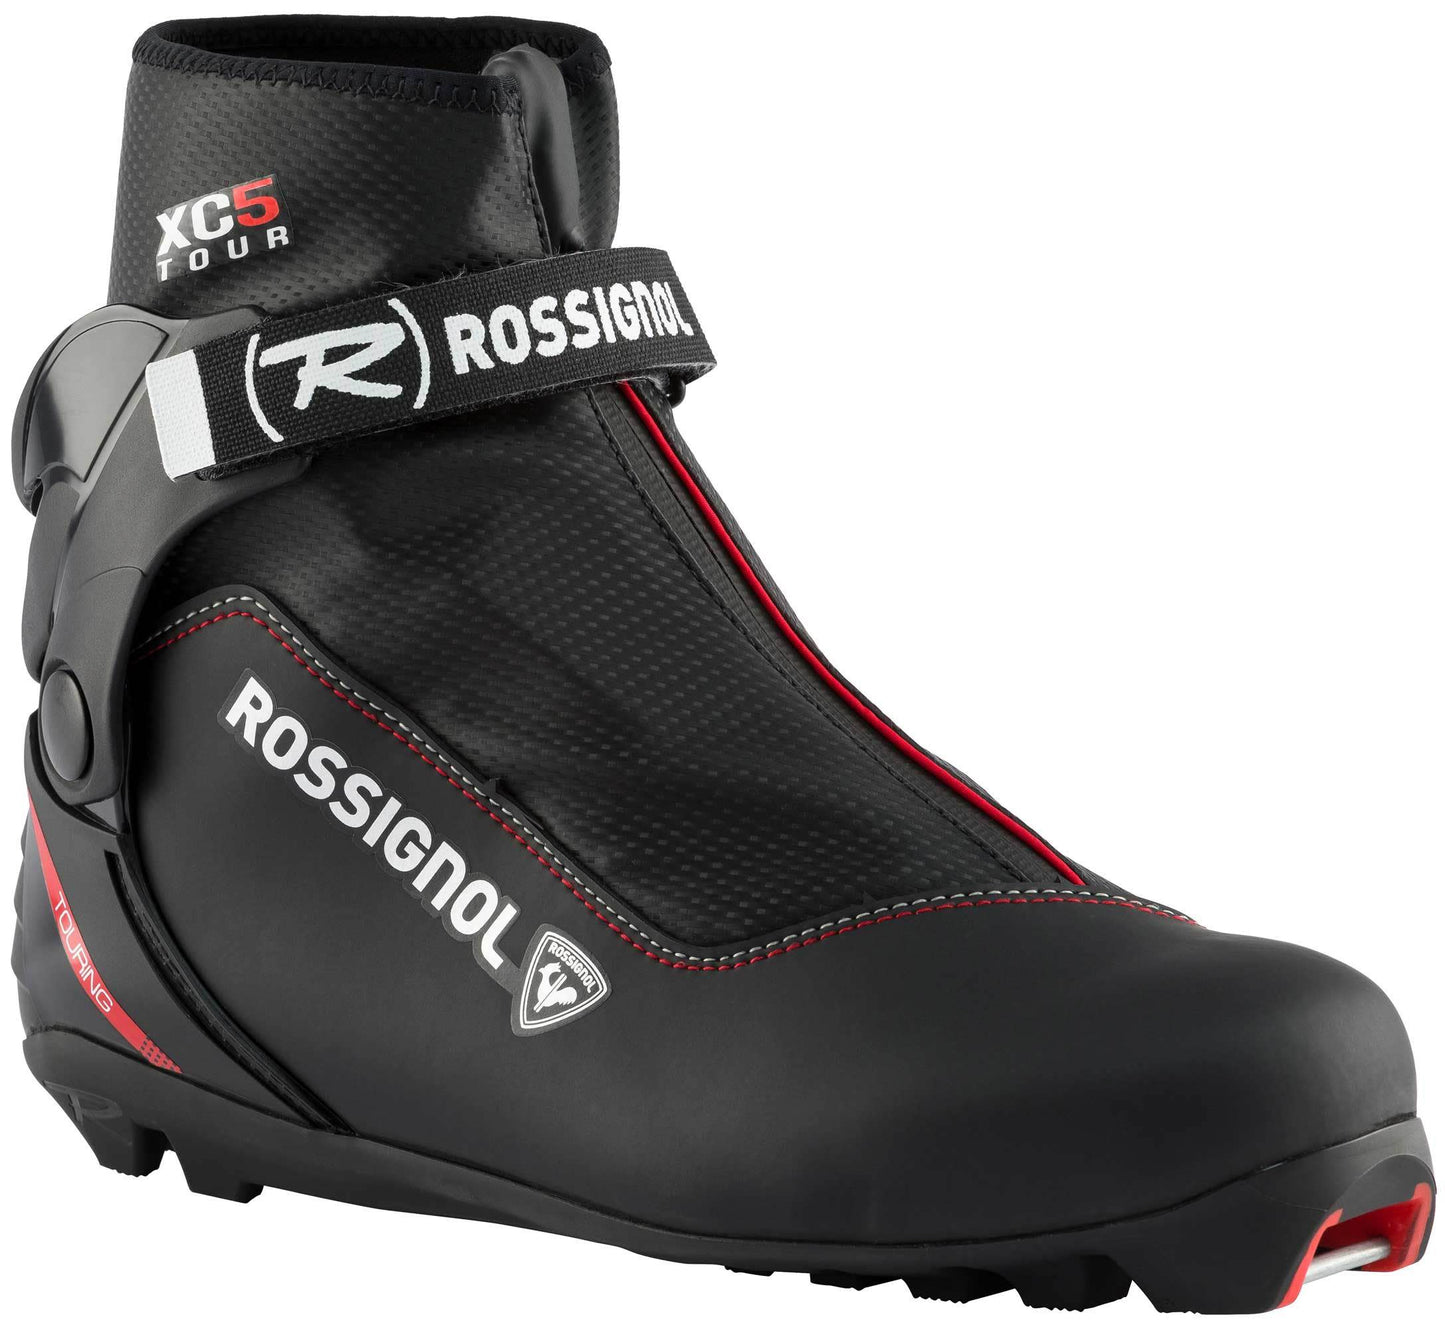 Rossignol XC-5 Nordic Ski Boots